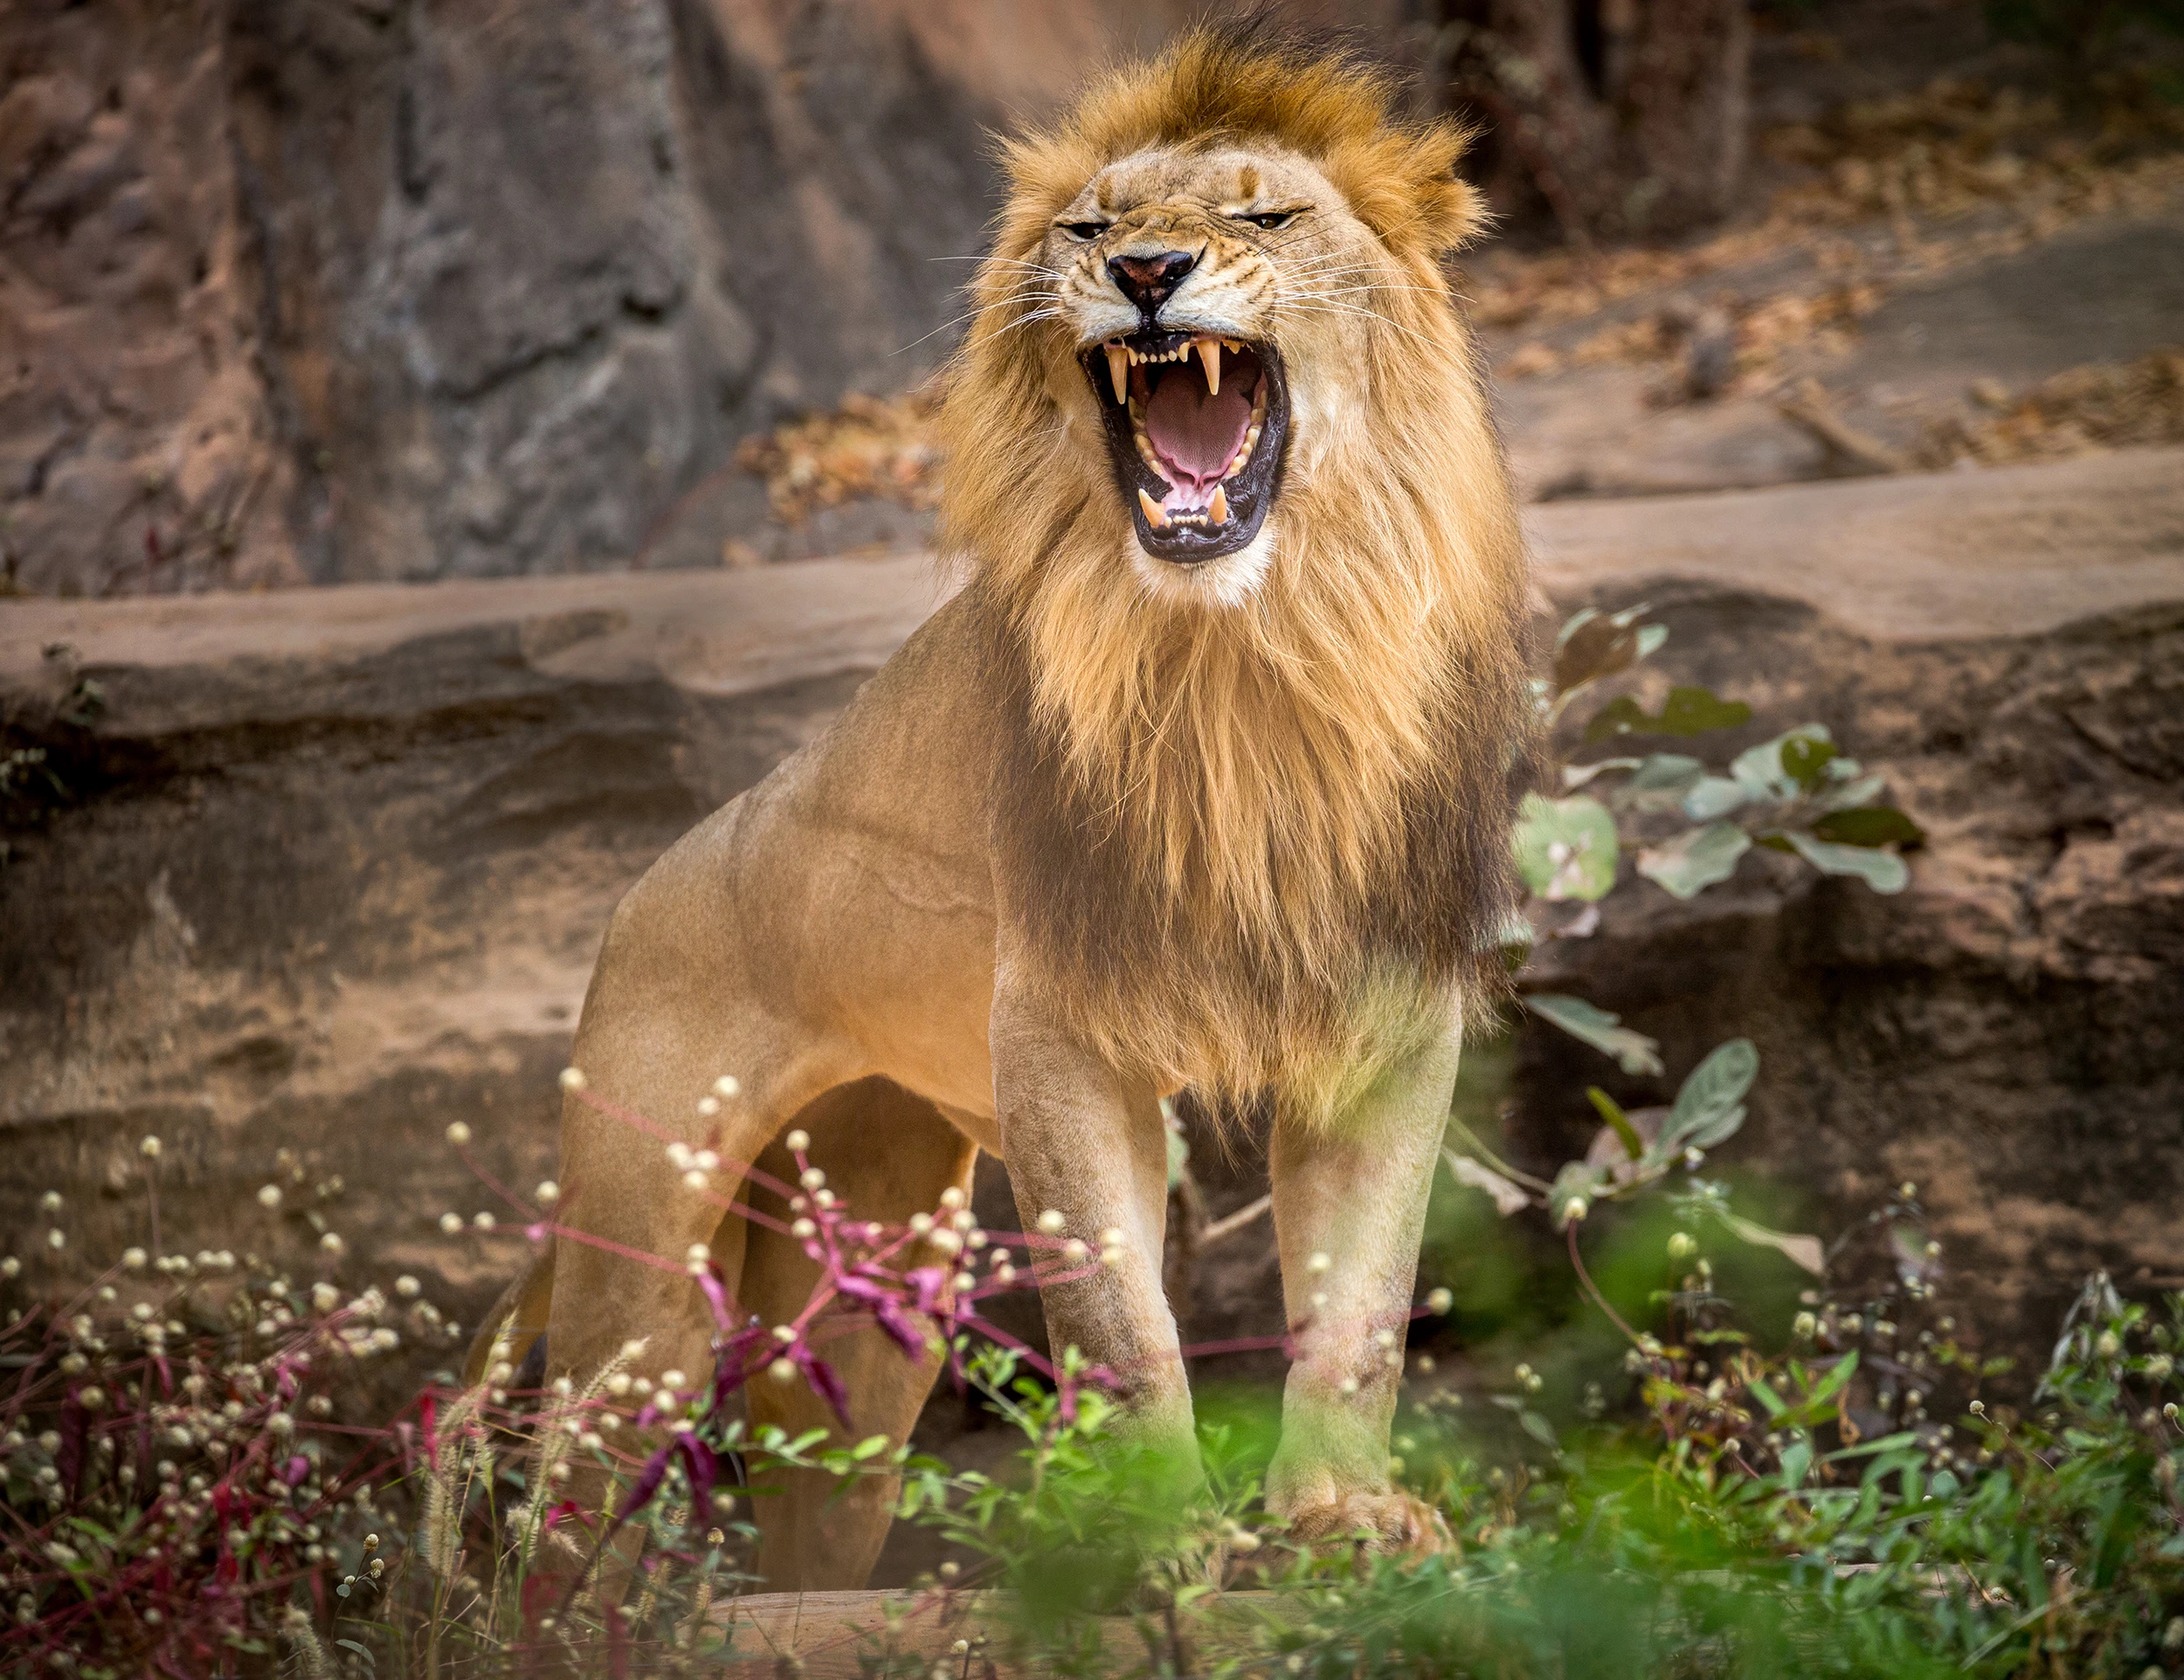 alpha lion